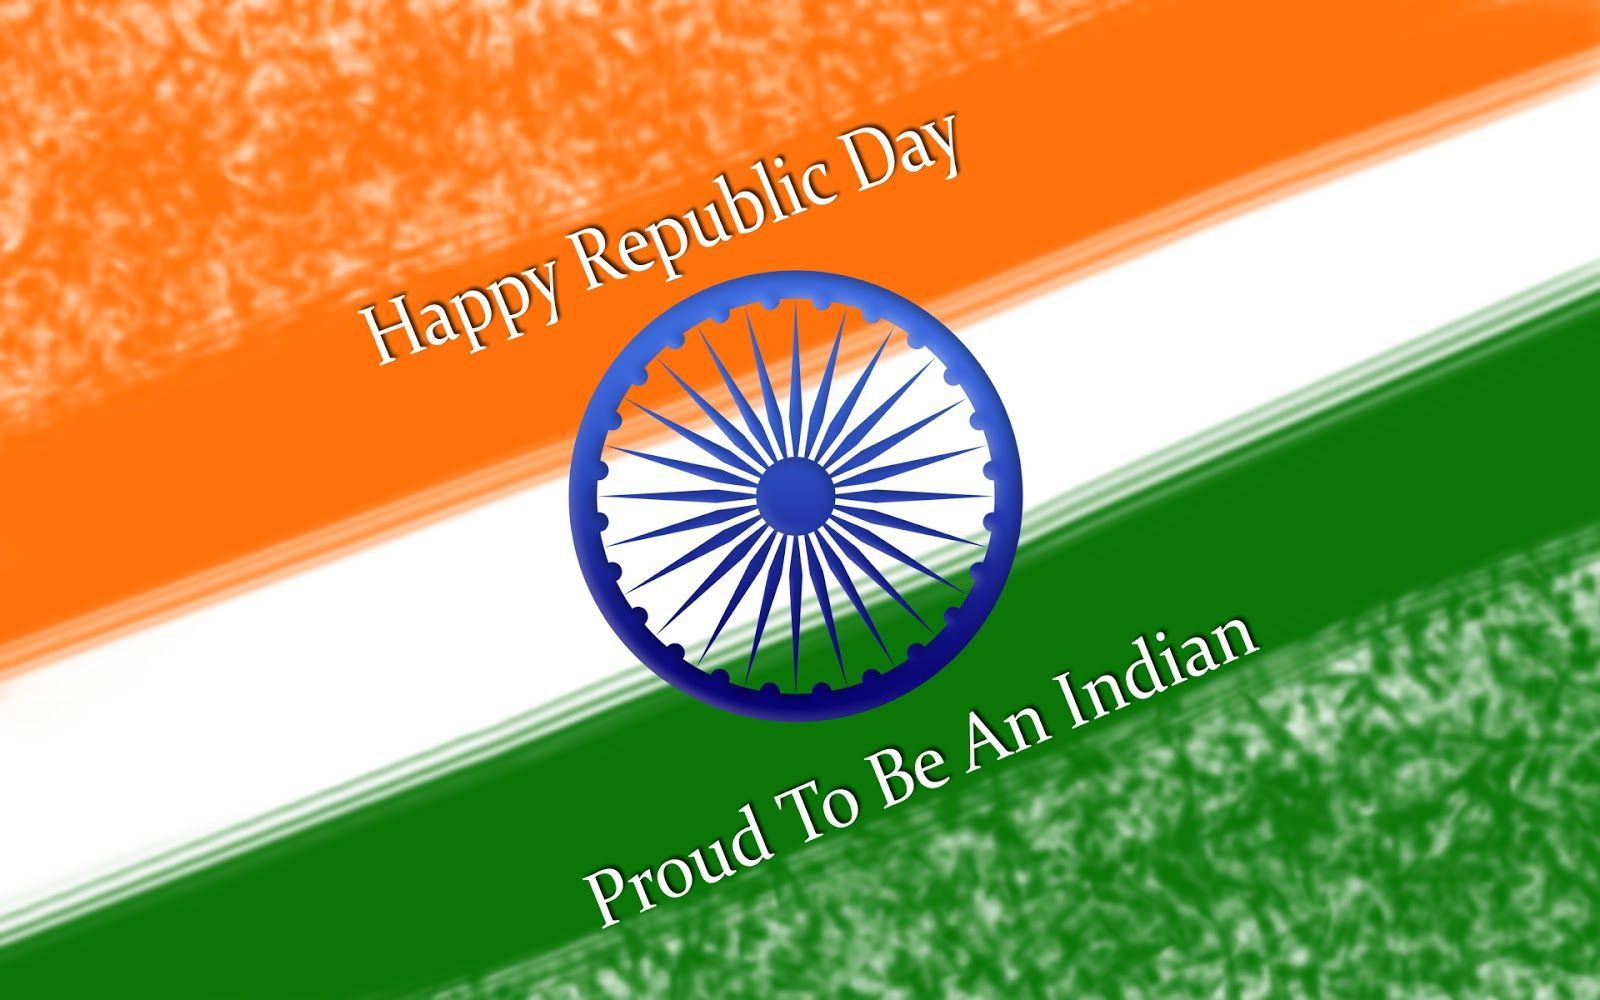 Happy Republic day 2016 Image HD pics Download photo For 26th January 2016. Happy Republic. Republic day image hd, Republic day image picture, Republic day